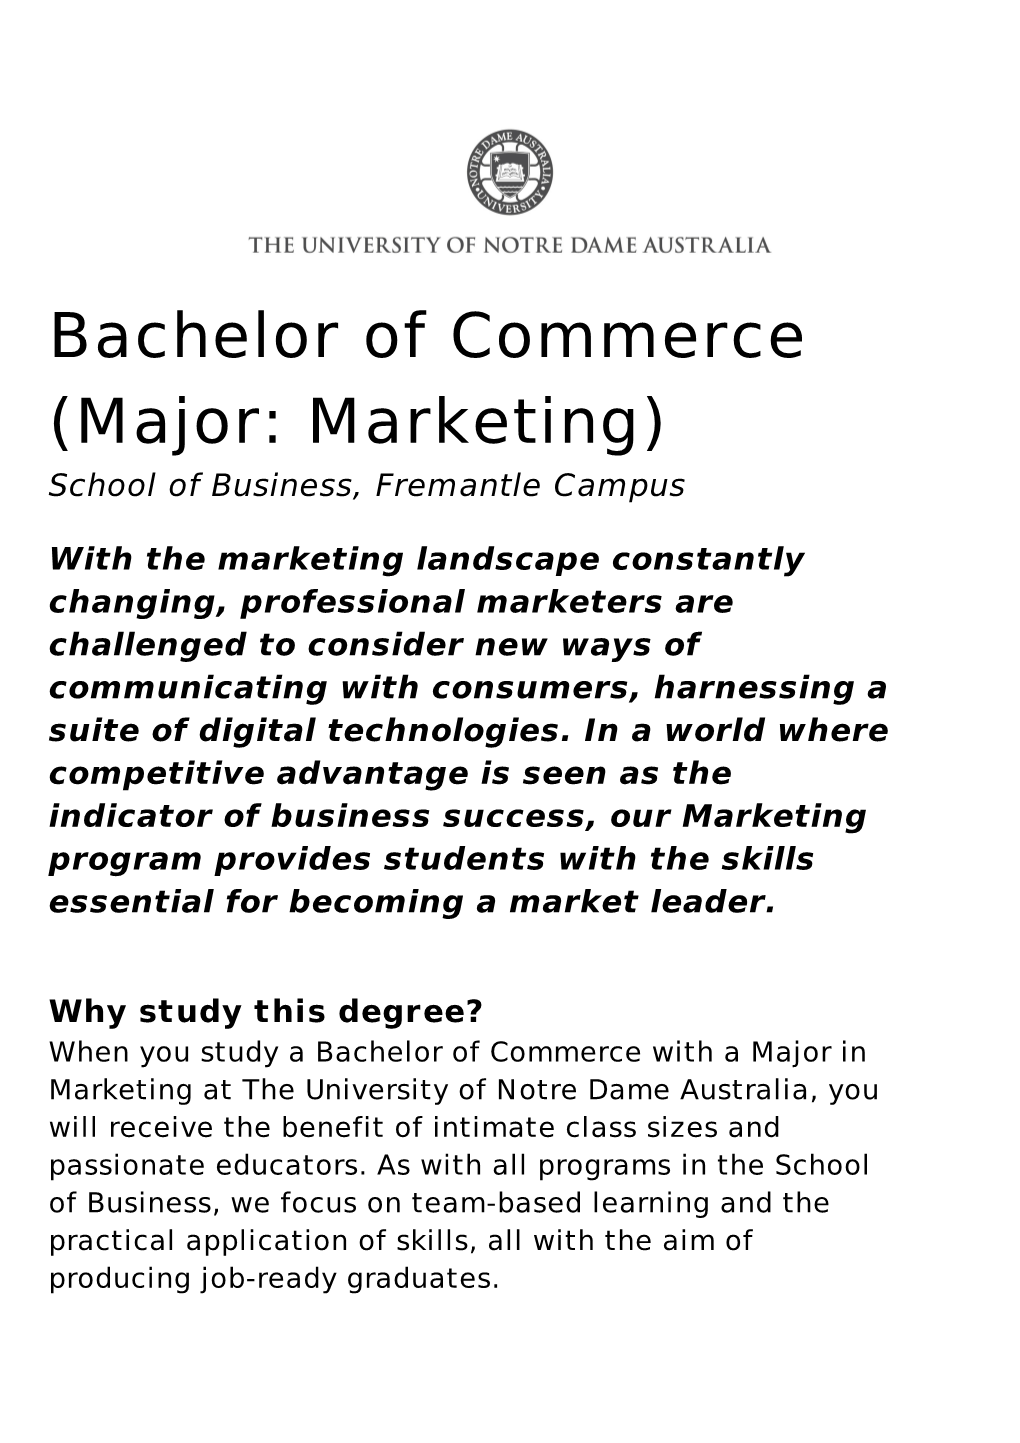 Bachelor of Commerce (Major: Marketing) School of Business, Fremantle Campus